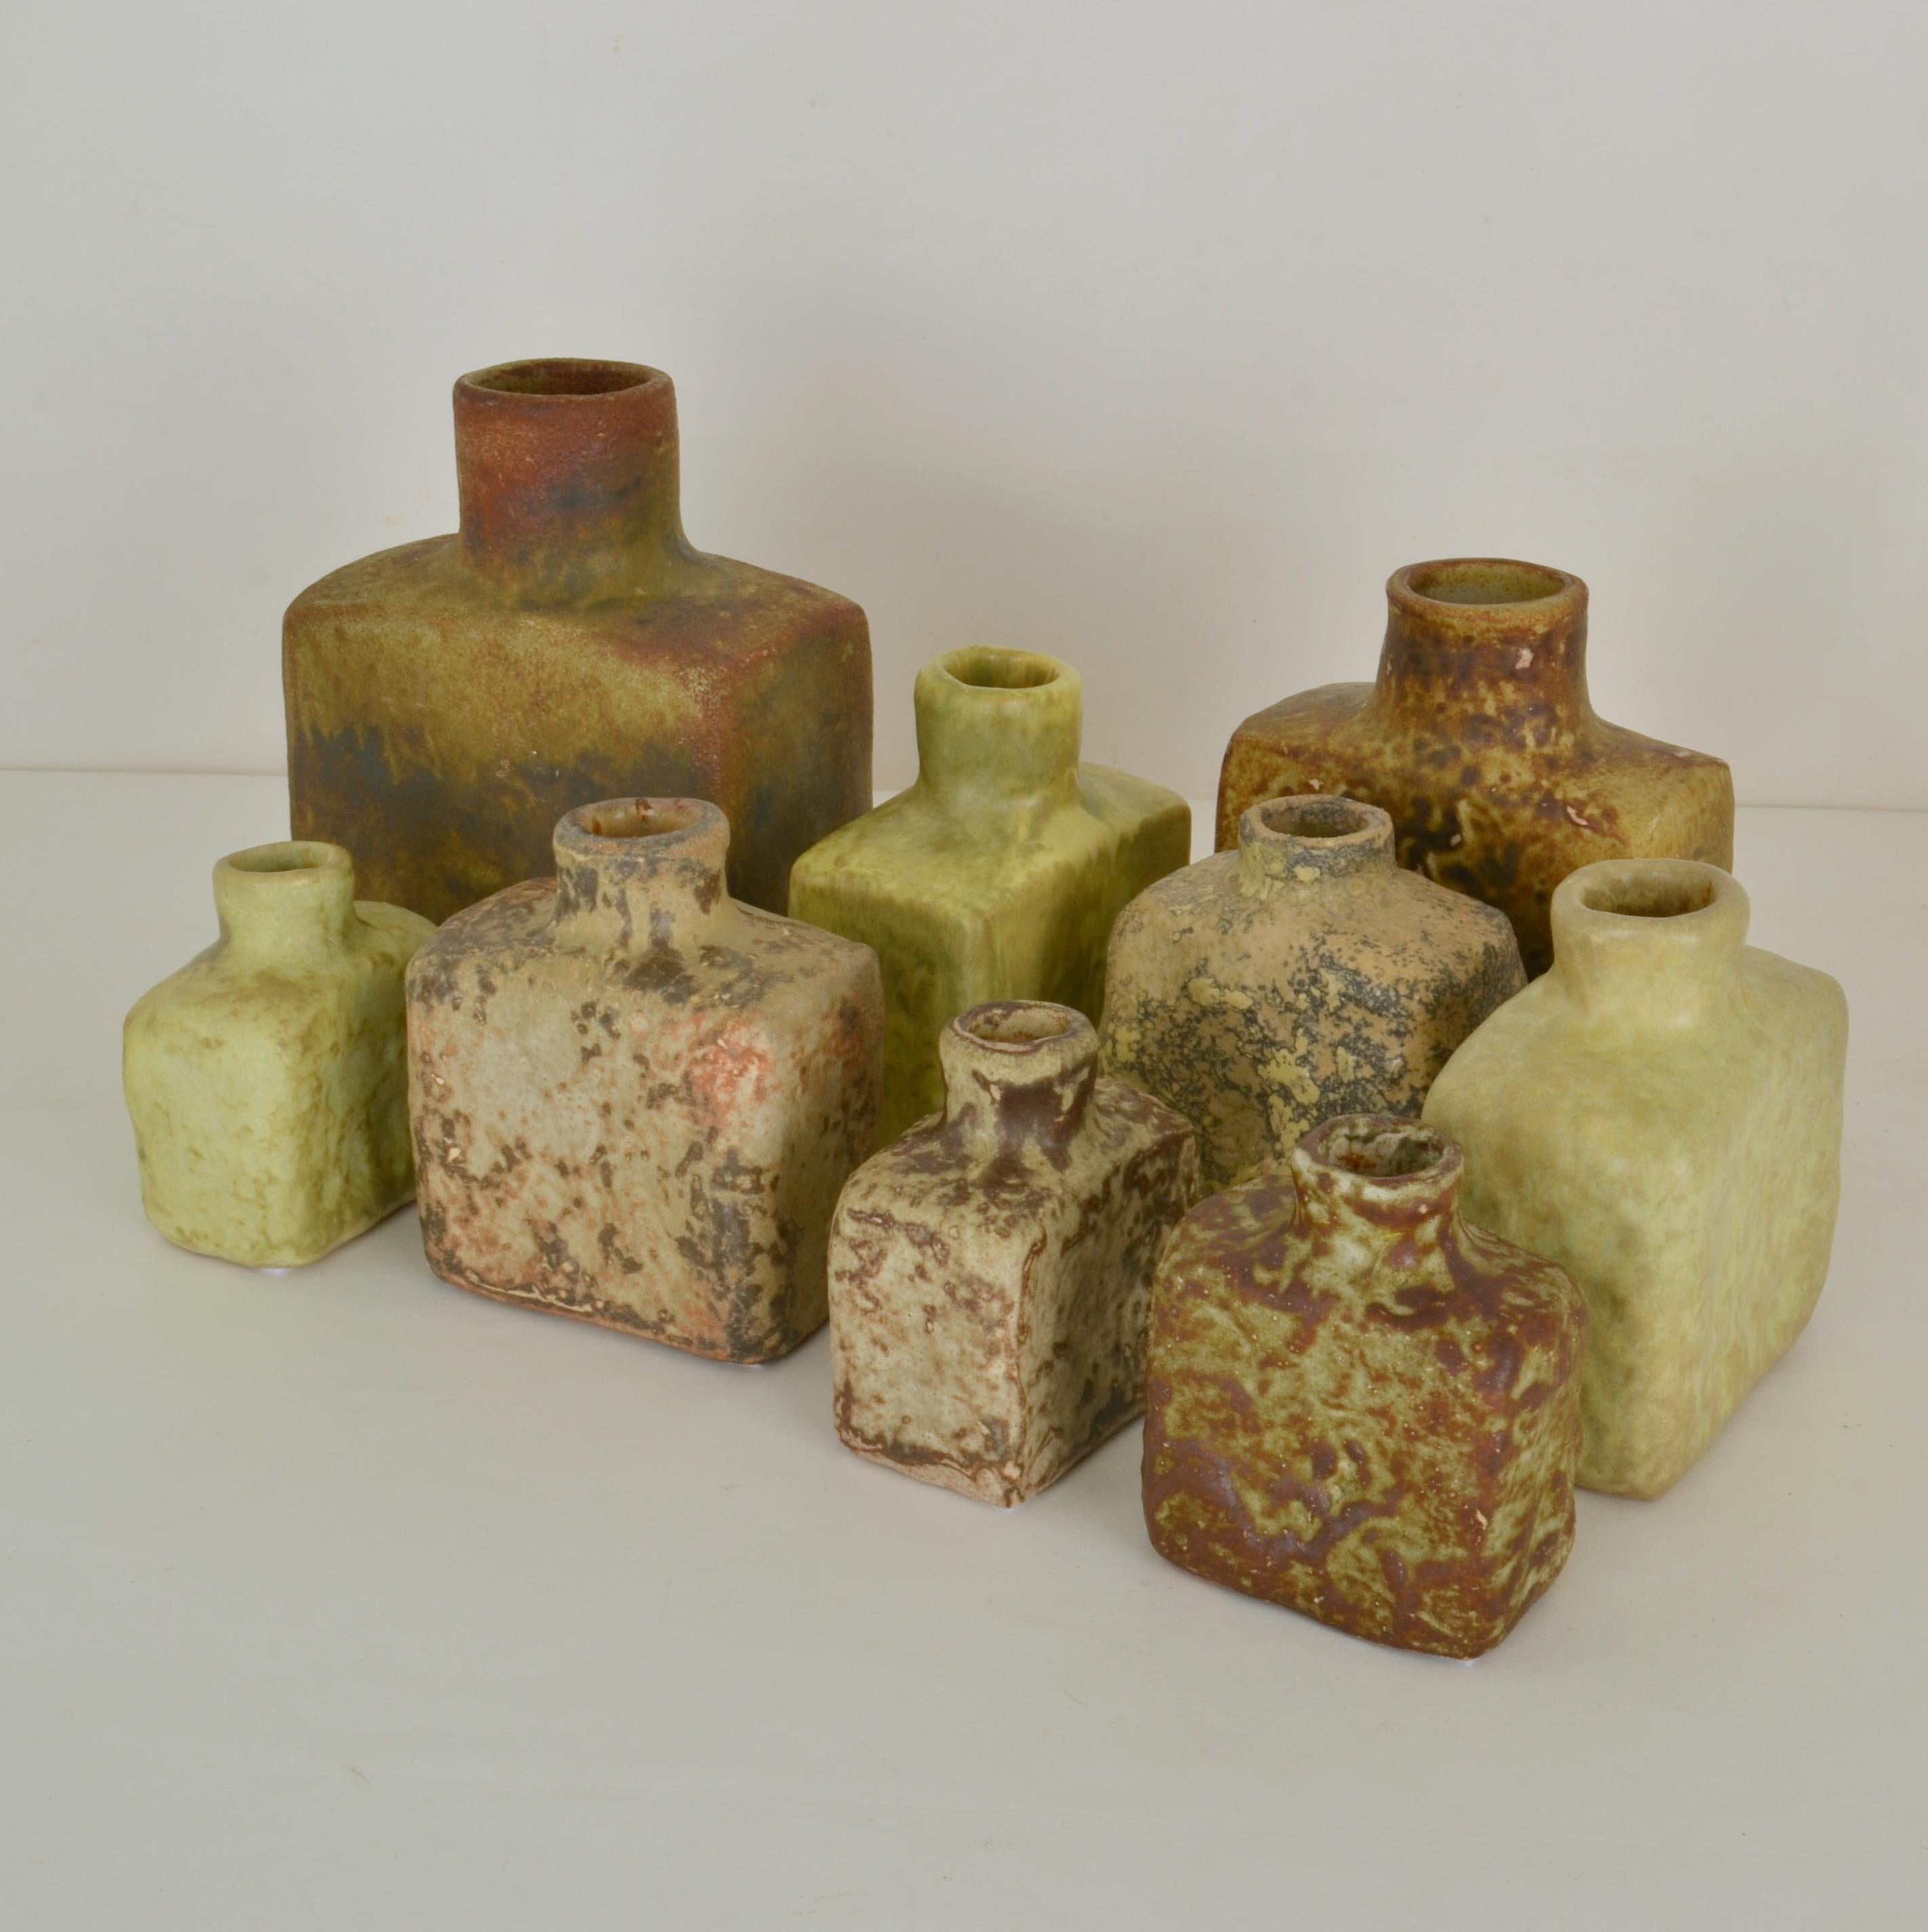 Glazed Group of Square Studio Ceramic Vases in Sage and Earth Tones